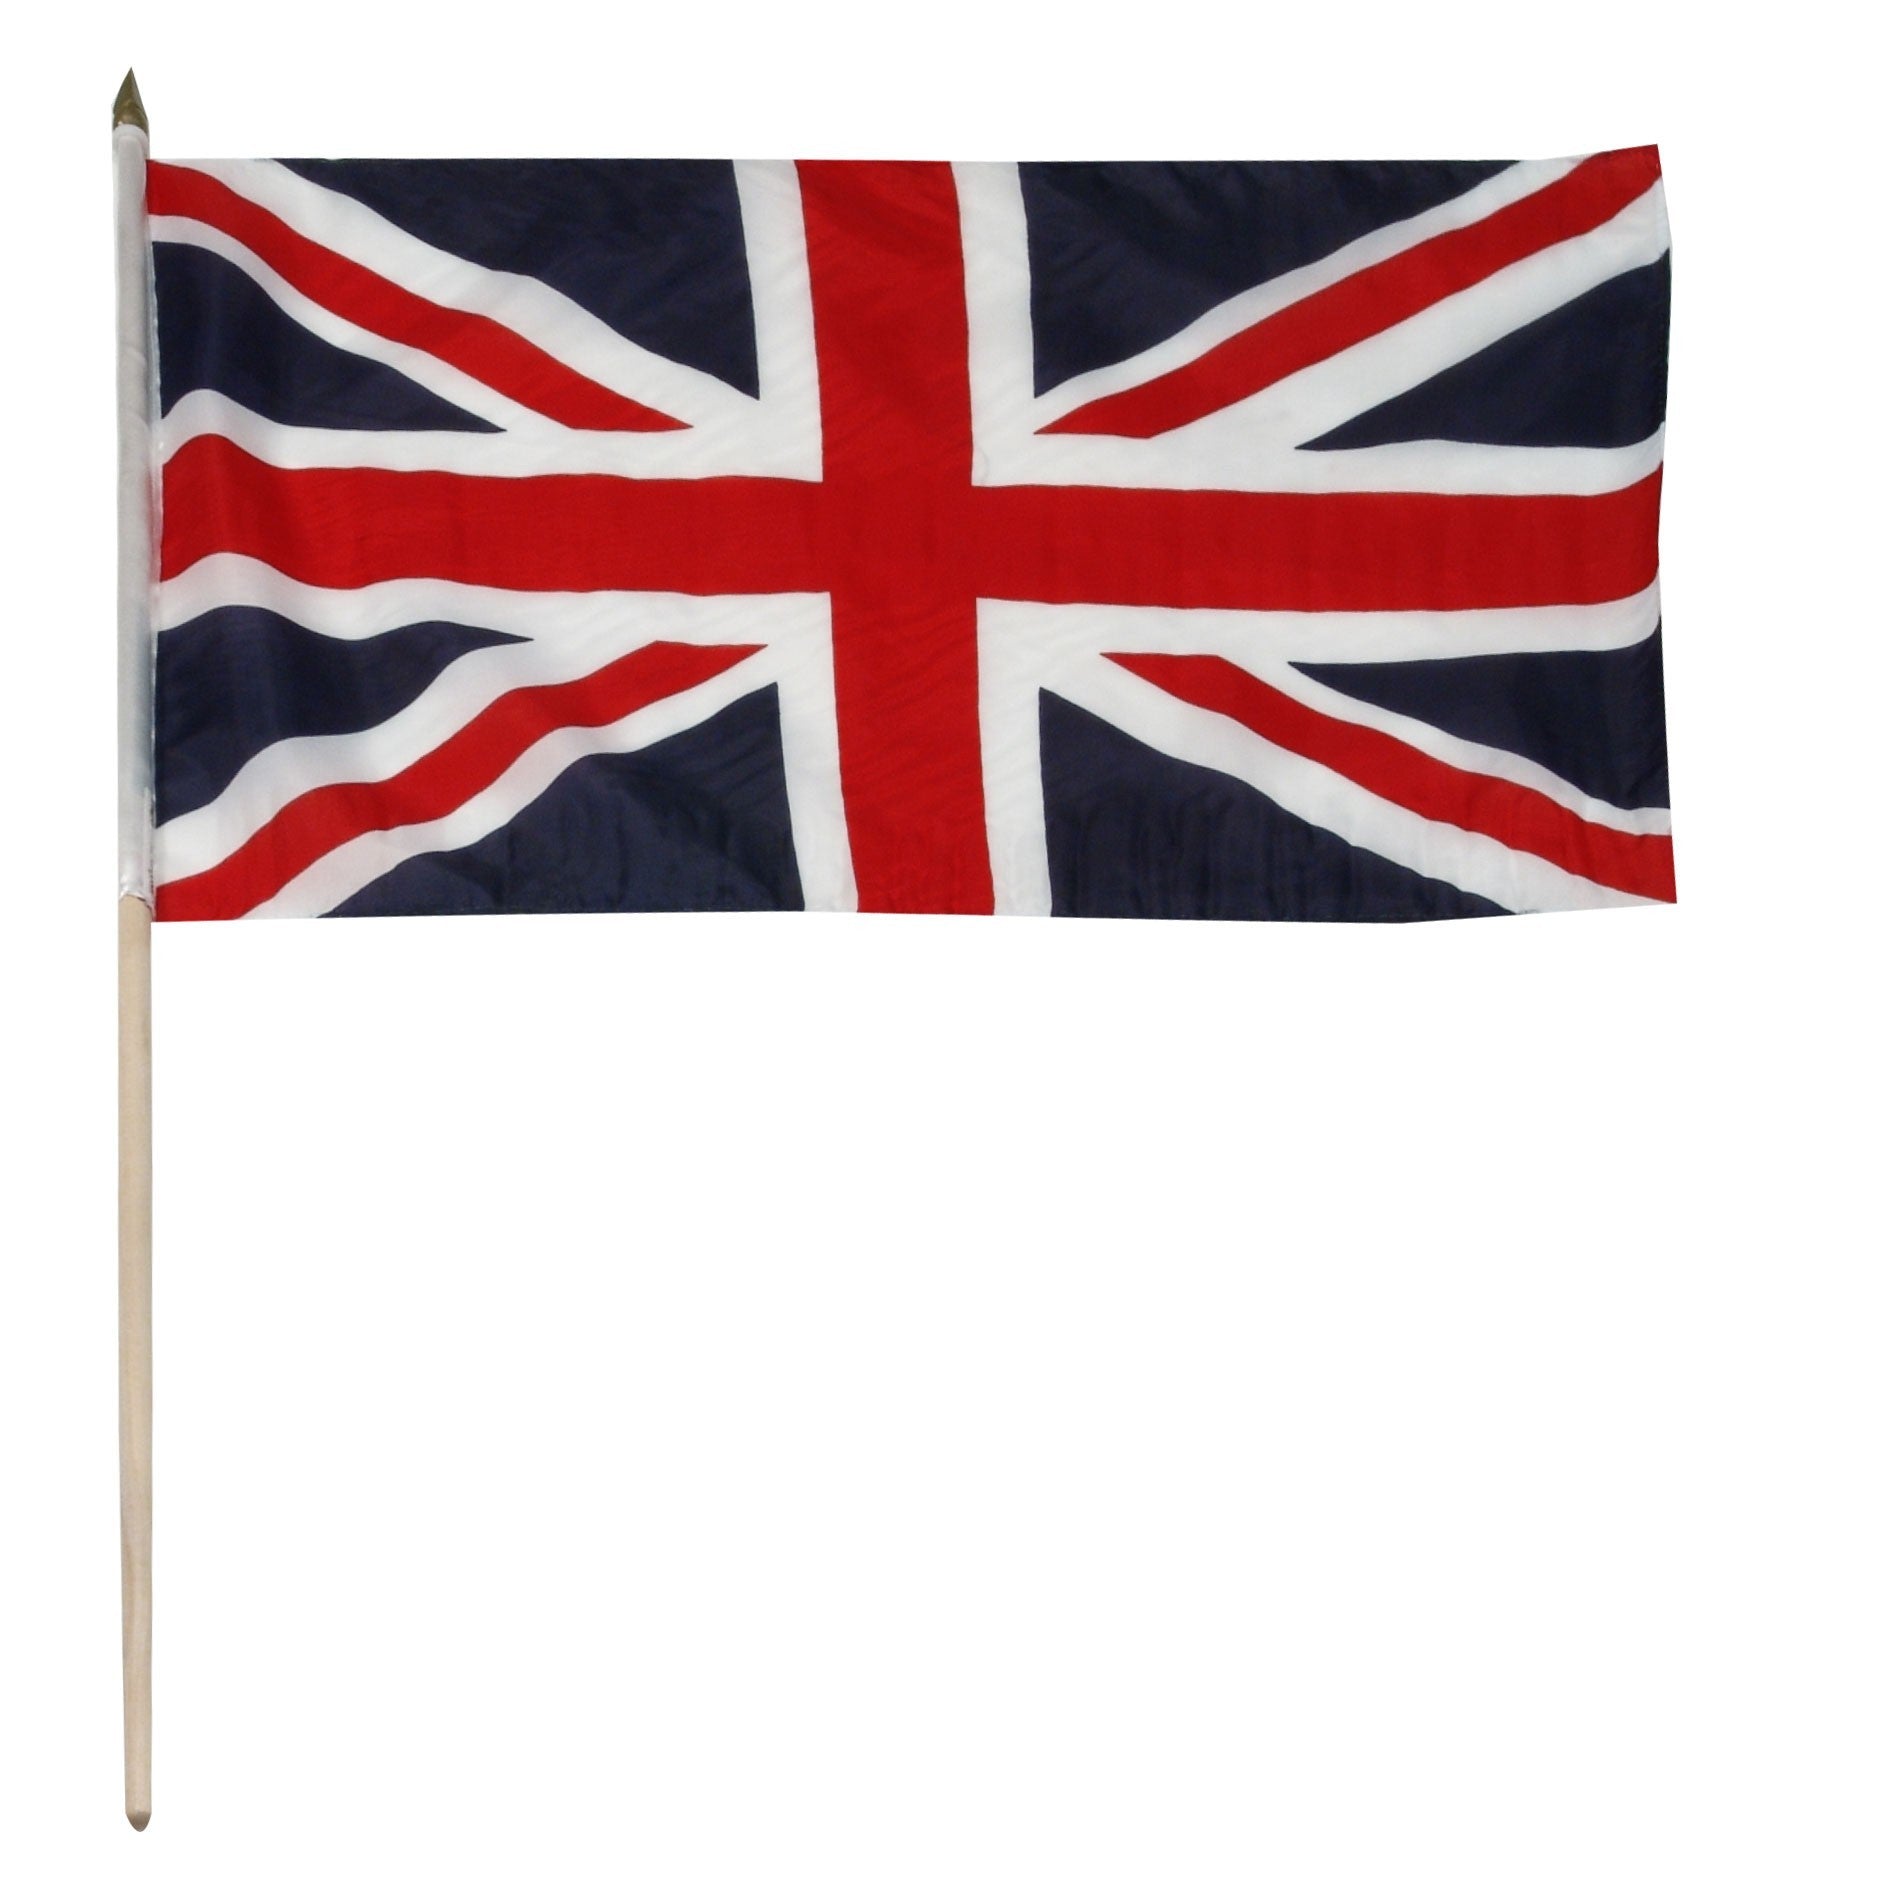 UK united kingdom flags for sale